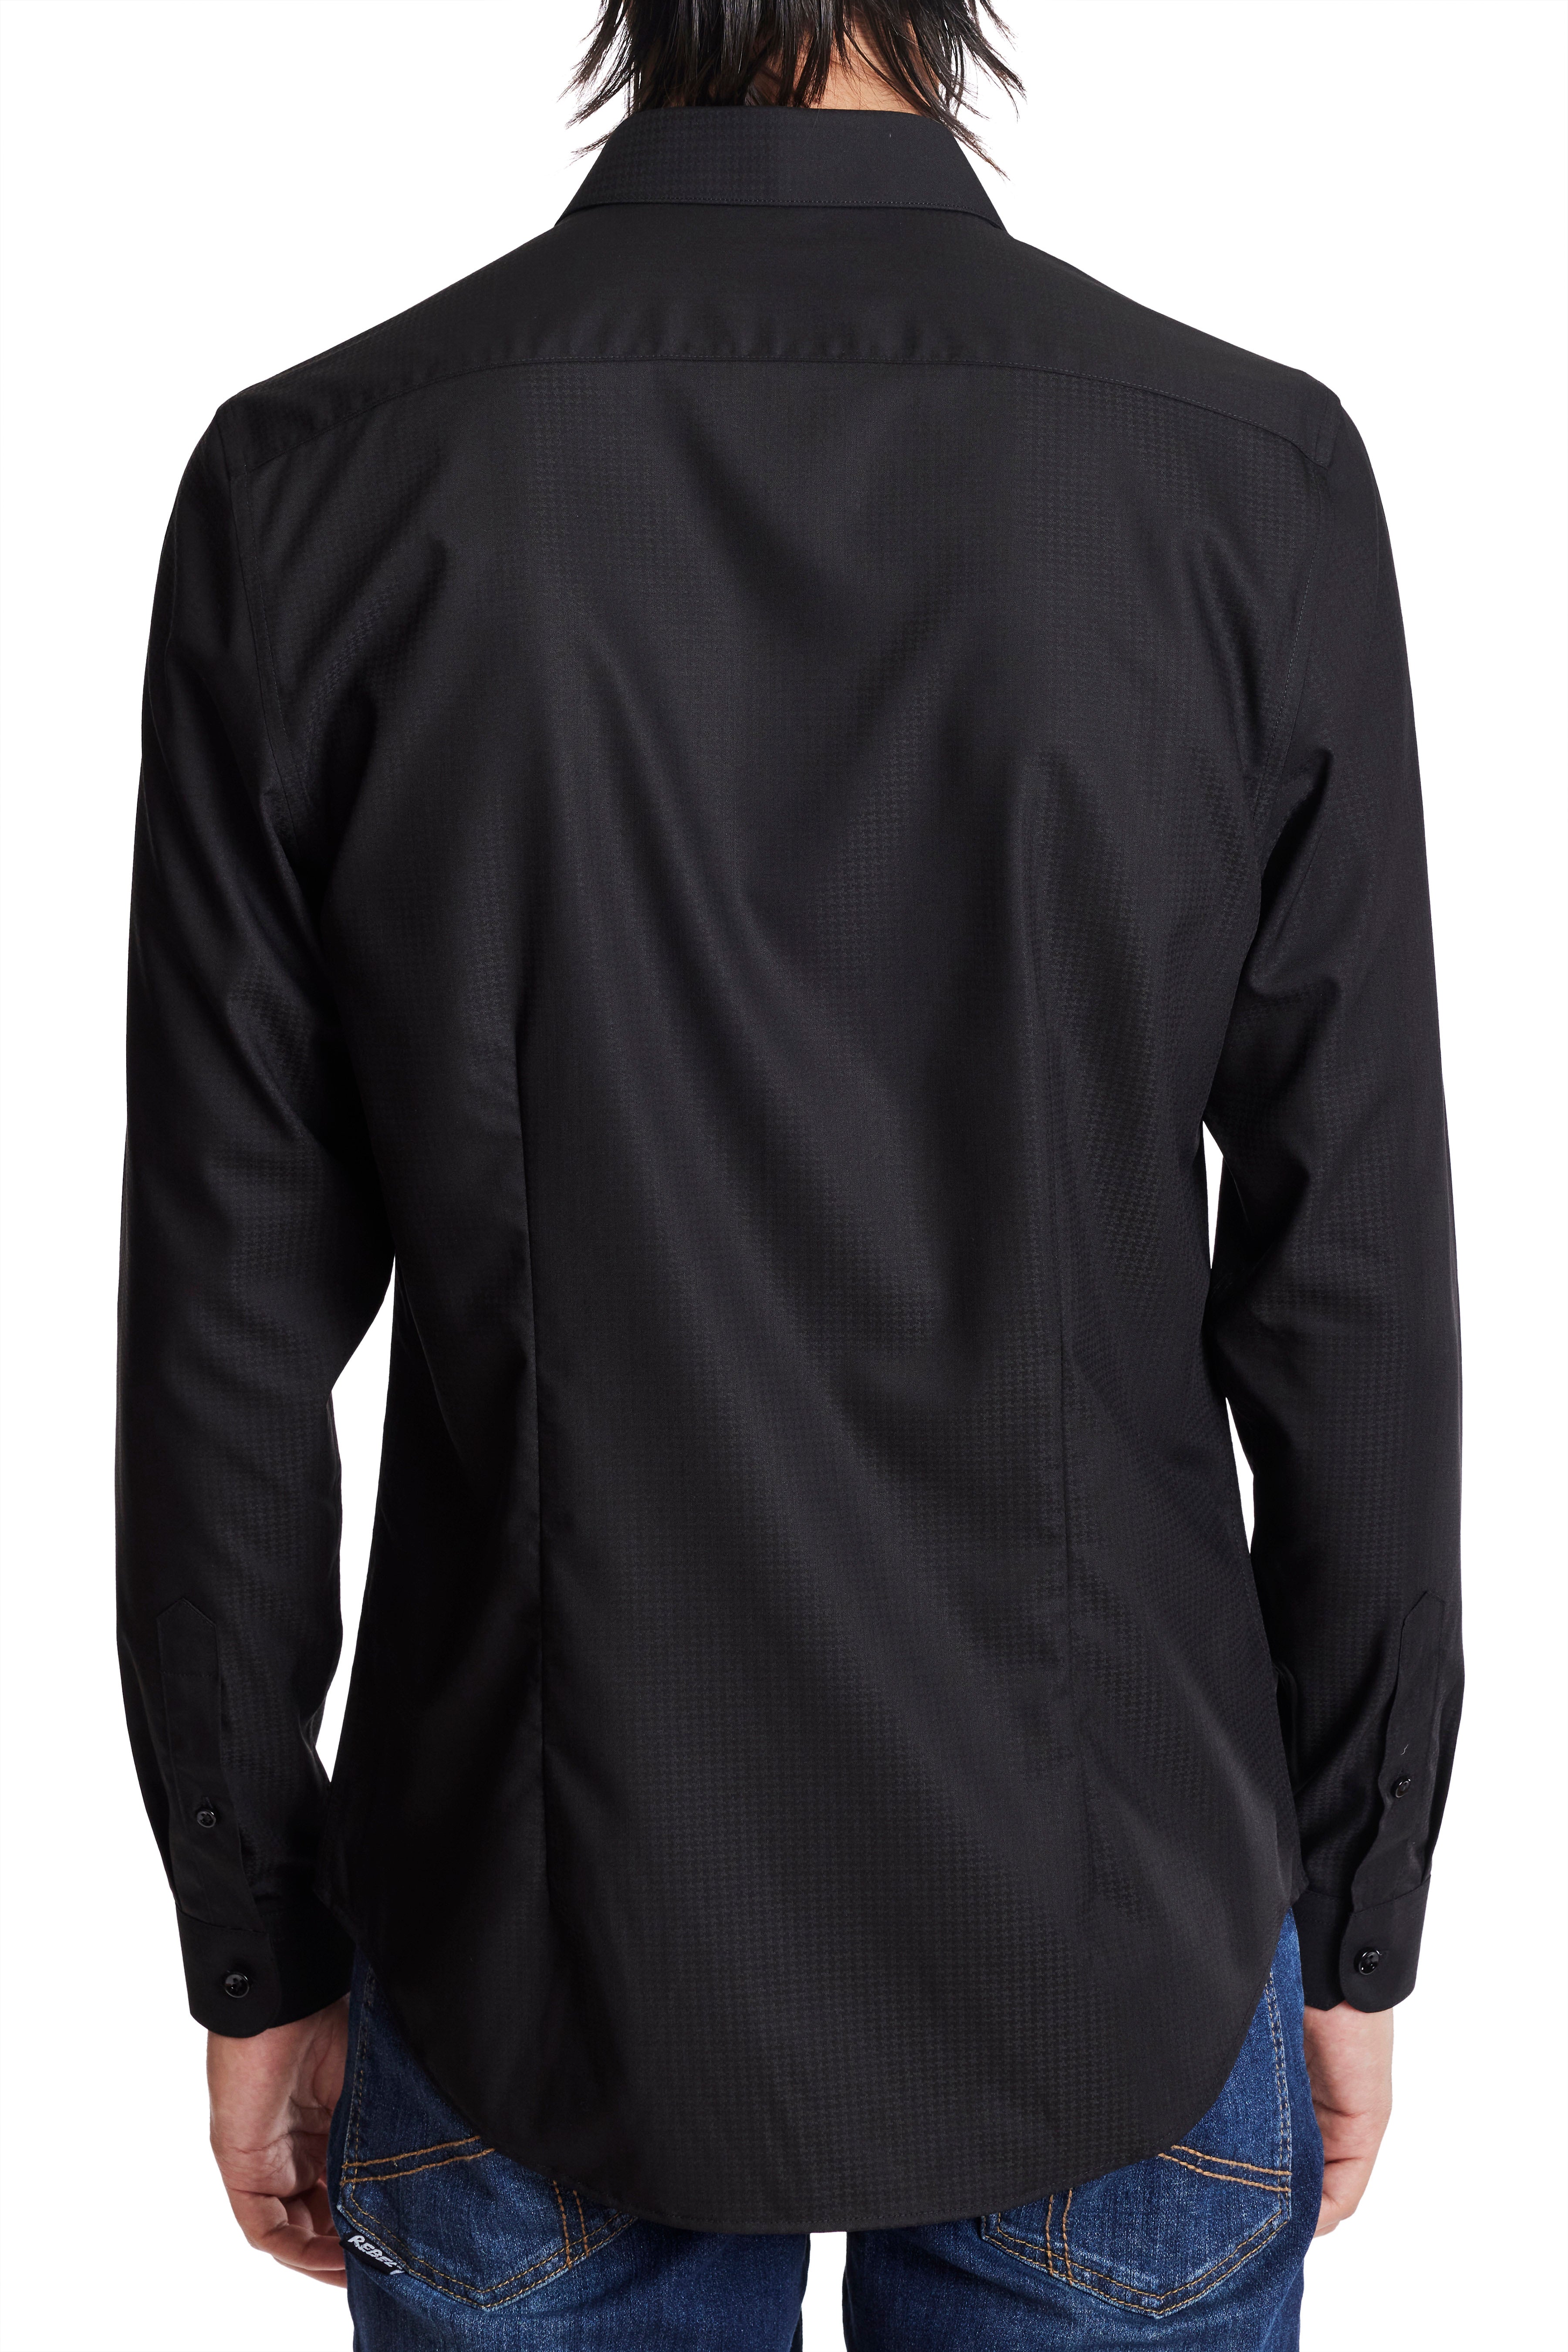 Samuel Spread Collar Shirt - Black Houndstooth Jacquard